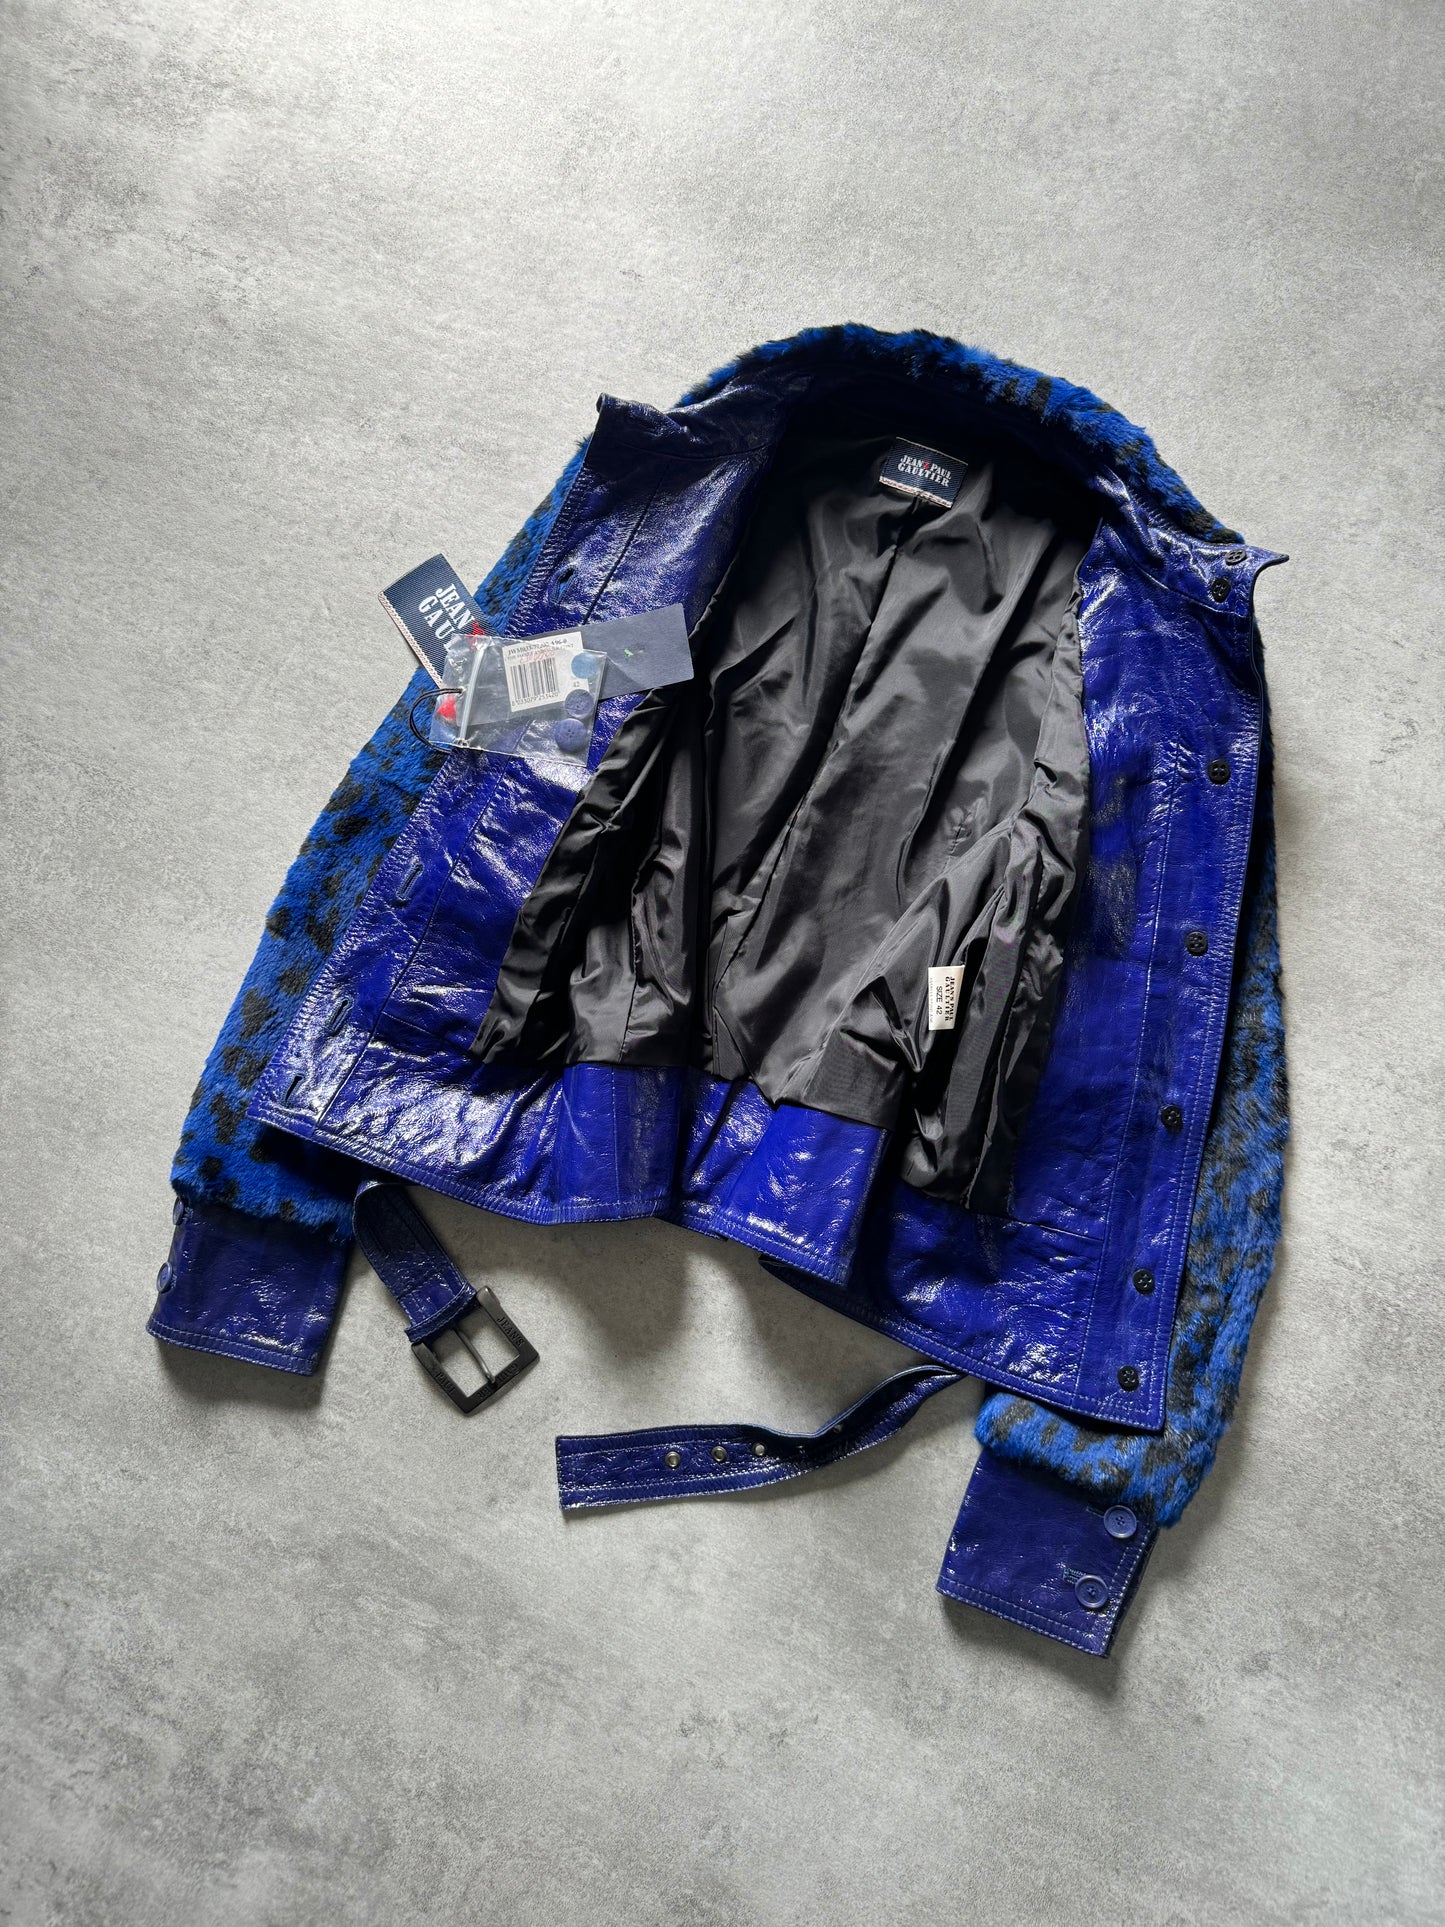 AW2011 Jean Paul Gaultier Blue Fur Rabbit Jacket (XS) - 5